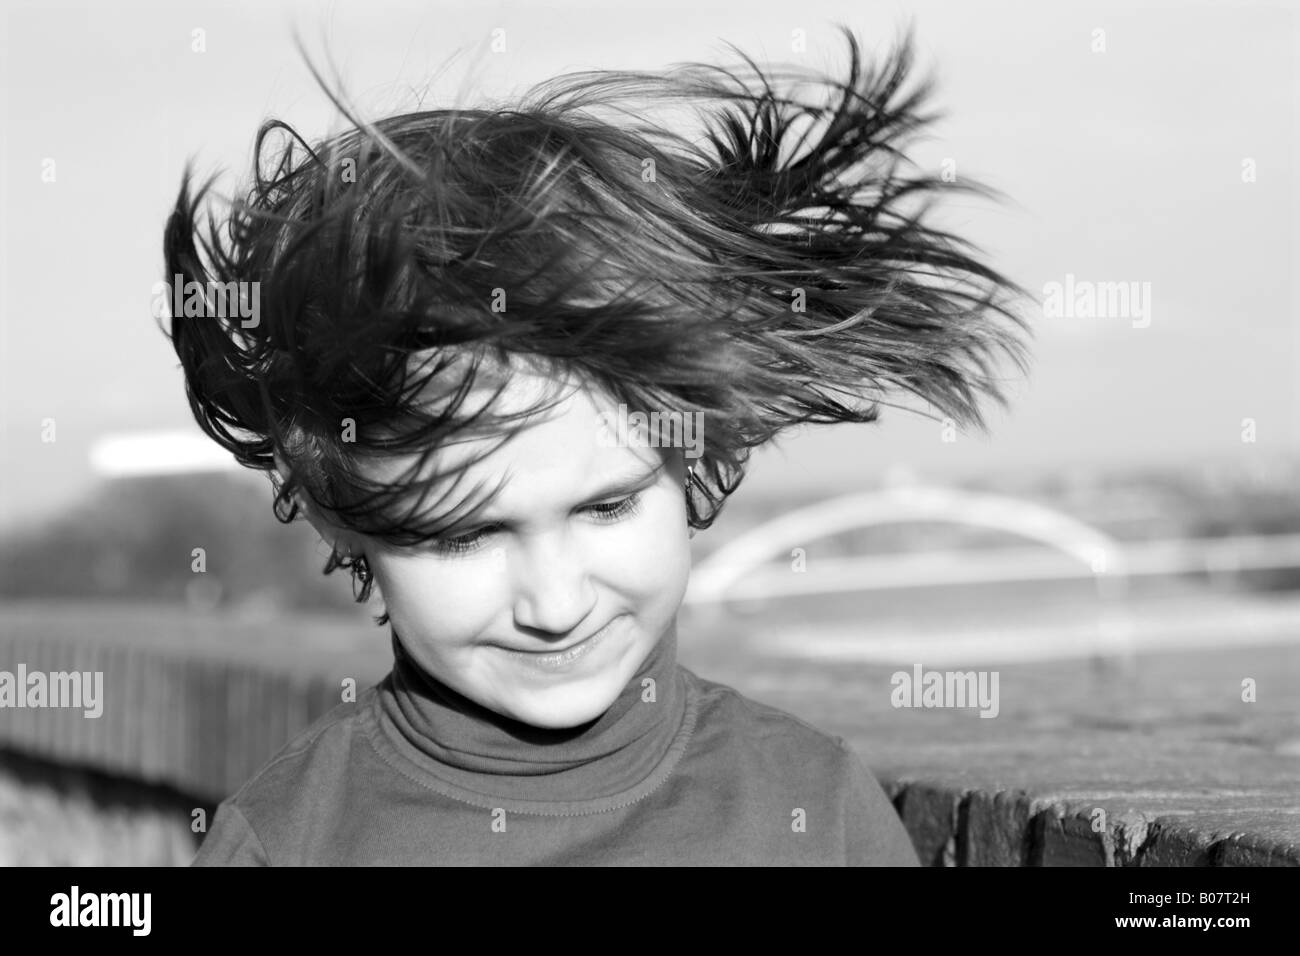 Bambina nel vento Foto stock - Alamy